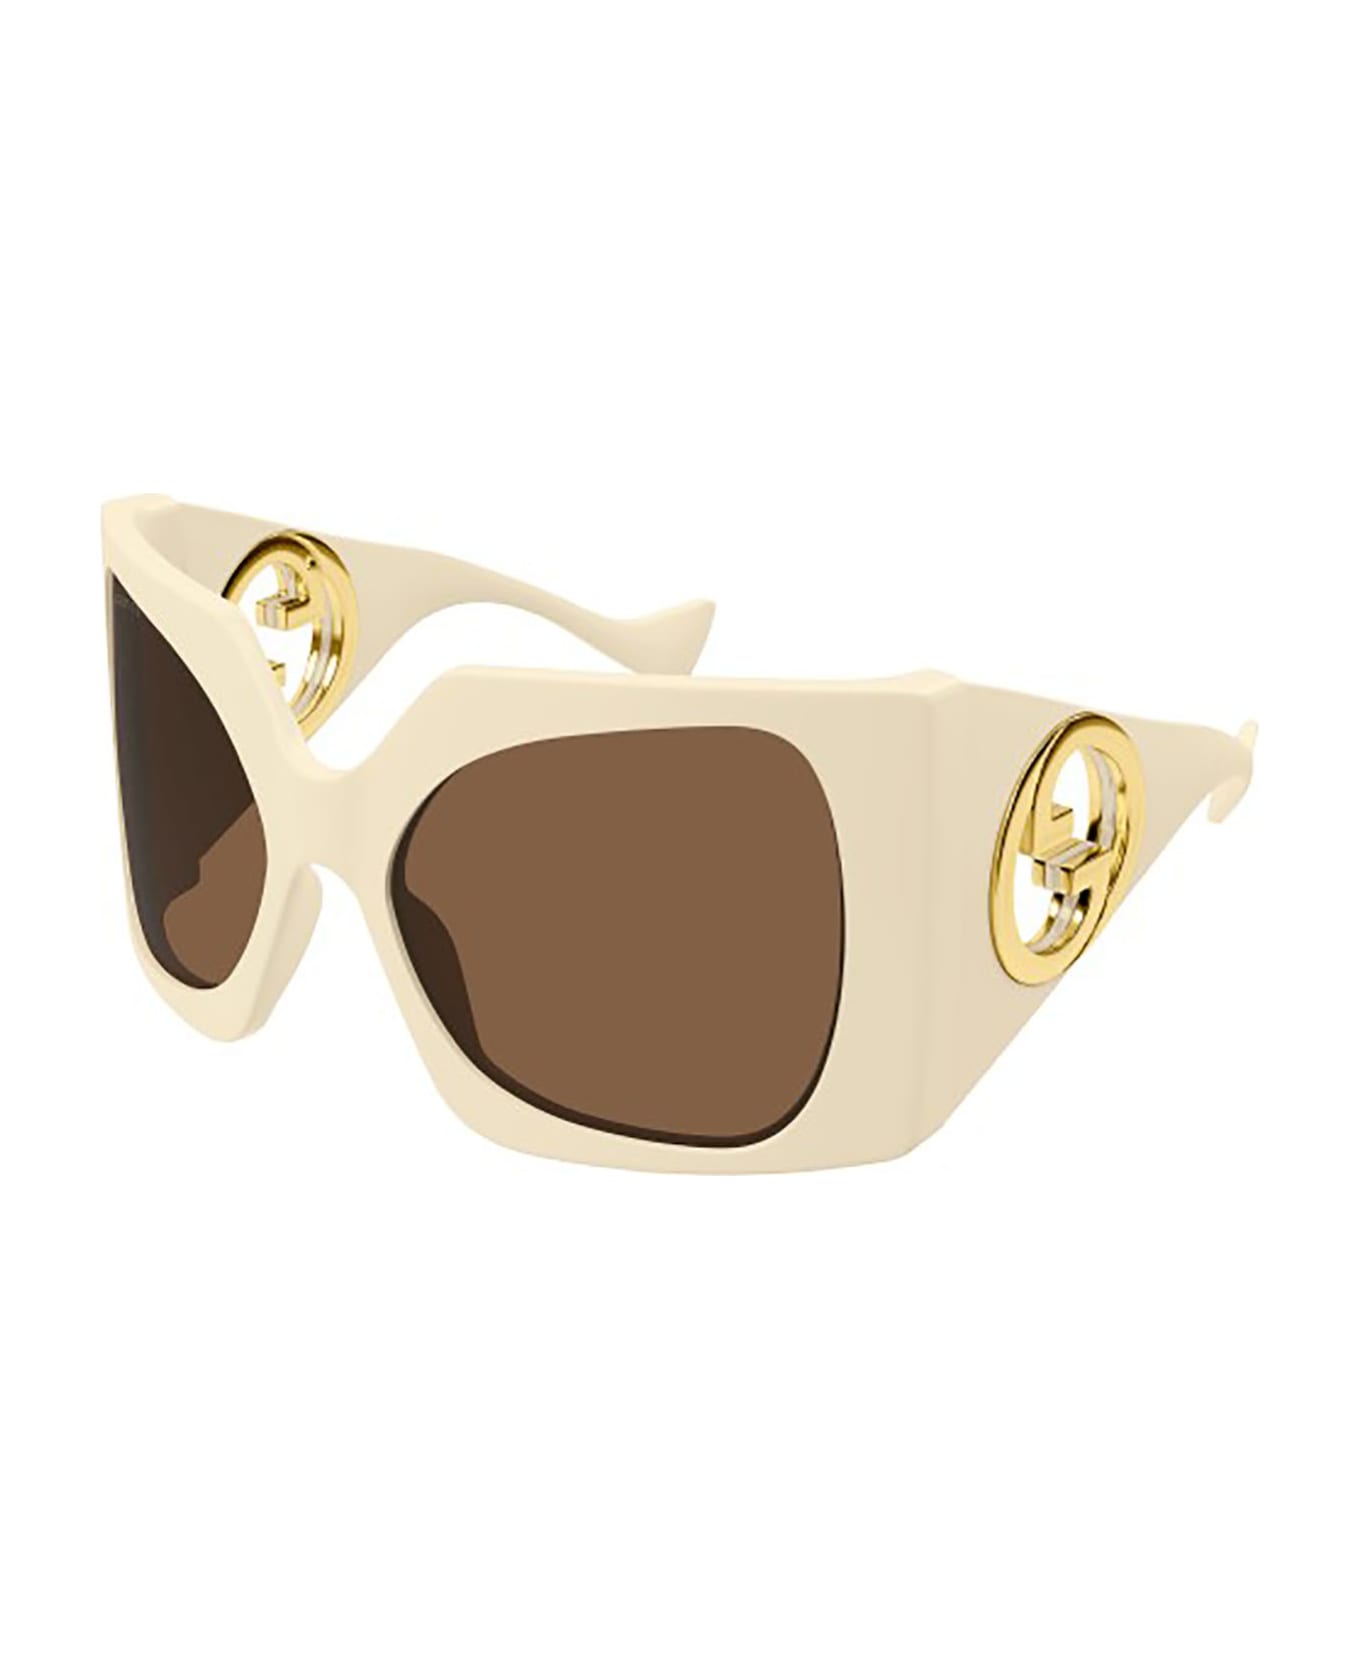 Gucci Eyewear GG1255S Sunglasses - Ivory White Brown